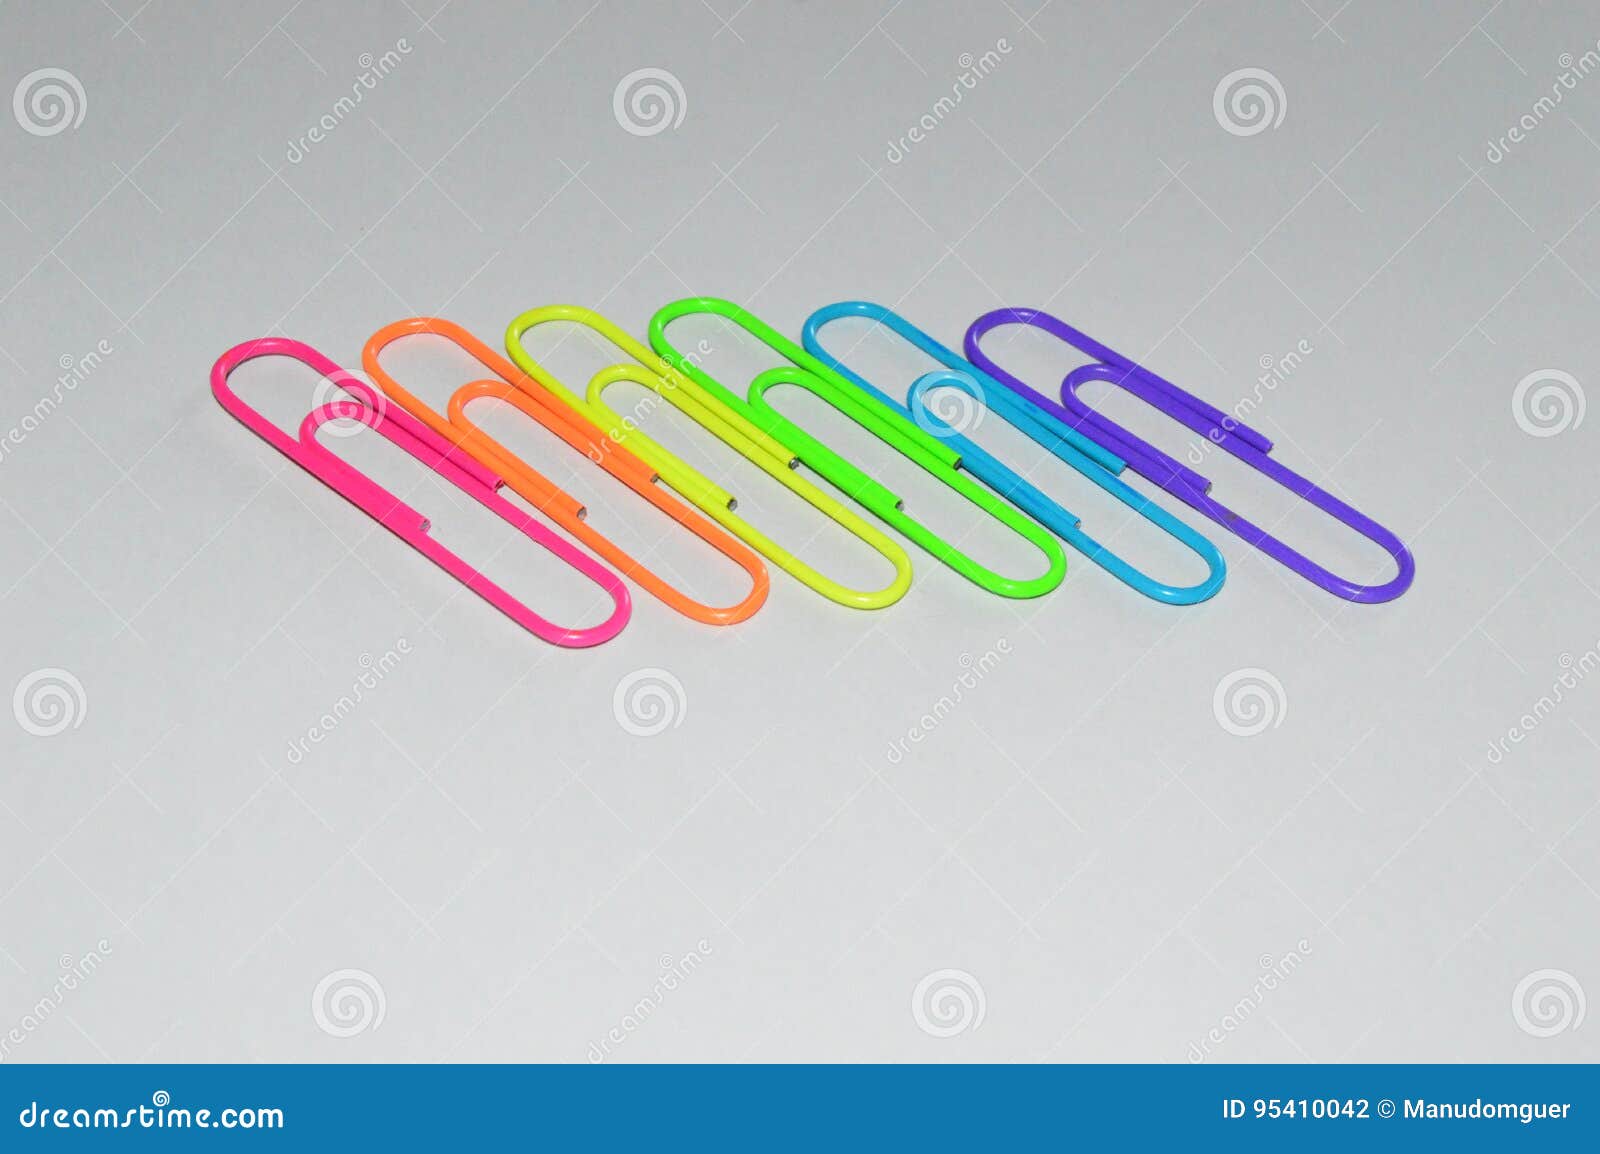 paper clips:lgbt rainbow flag